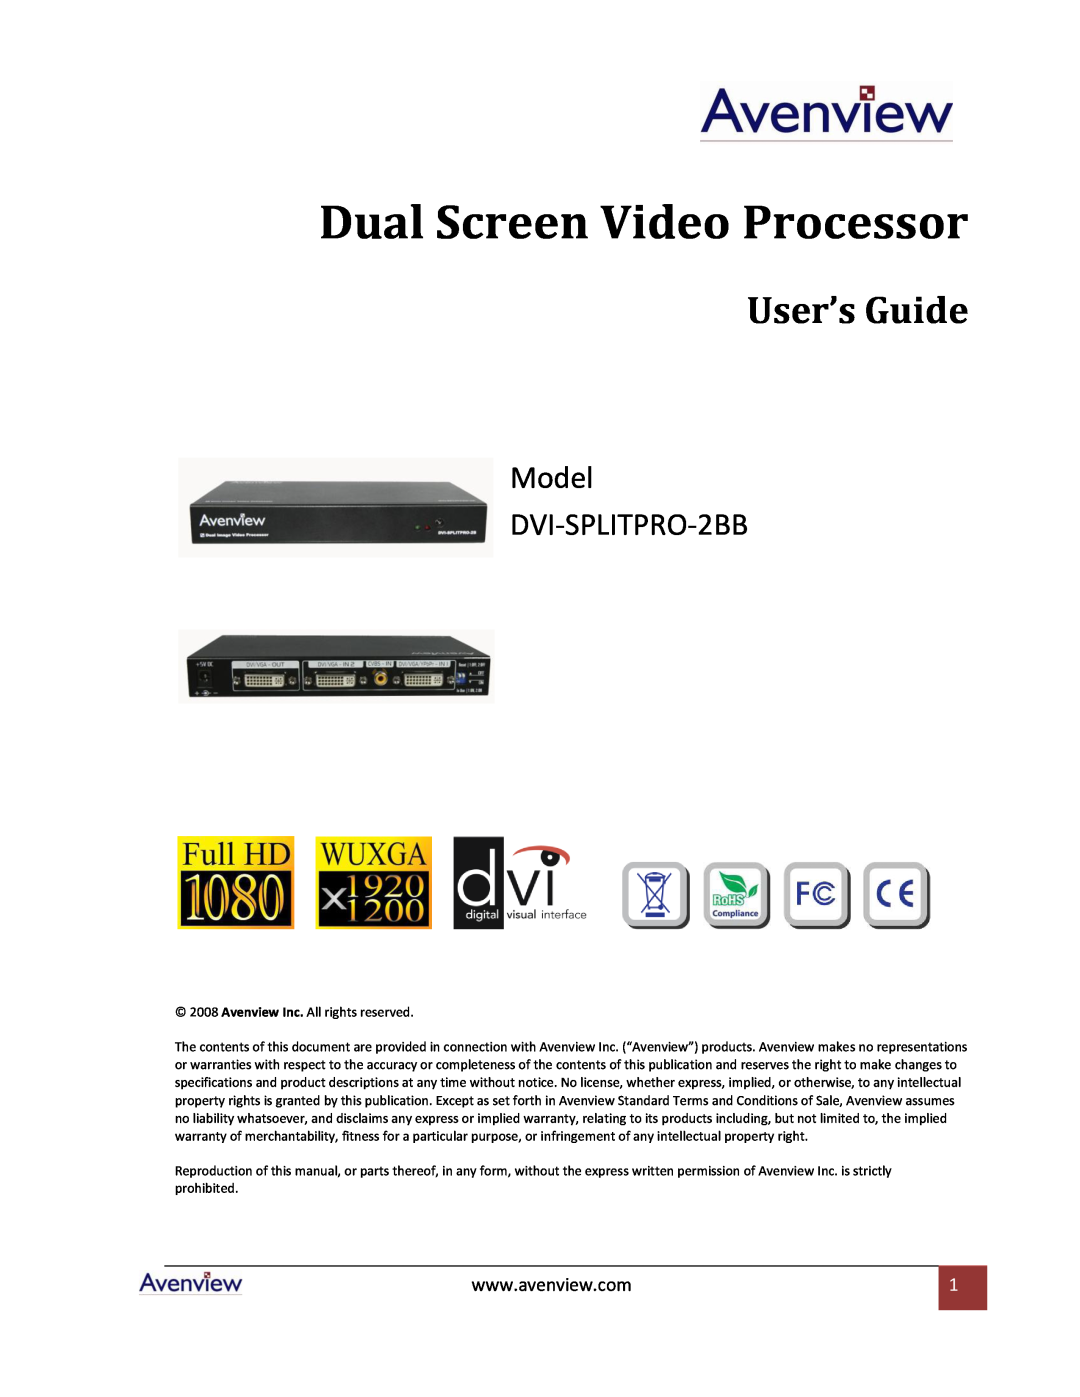 Avenview specifications Dual Screen Video Processor, User’s Guide, Model DVI-SPLITPRO-2BB 